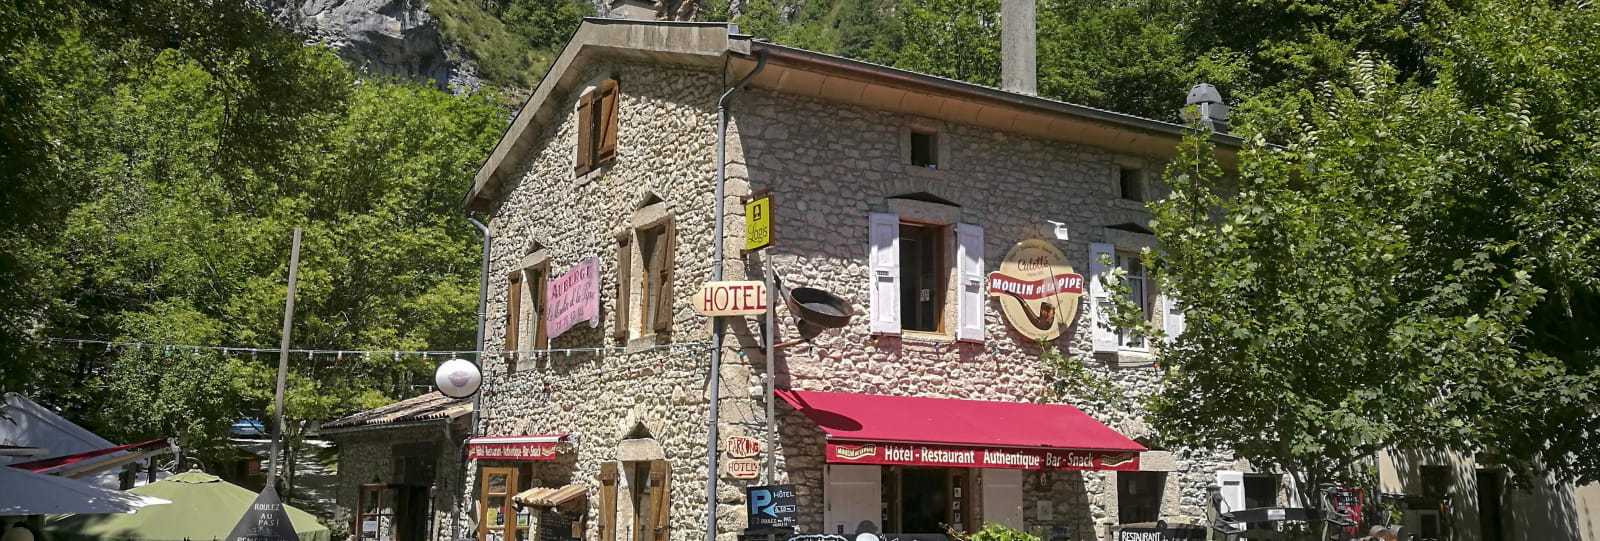 Hôtel-Restaurant-Bar-Snack le Moulin de la Pipe